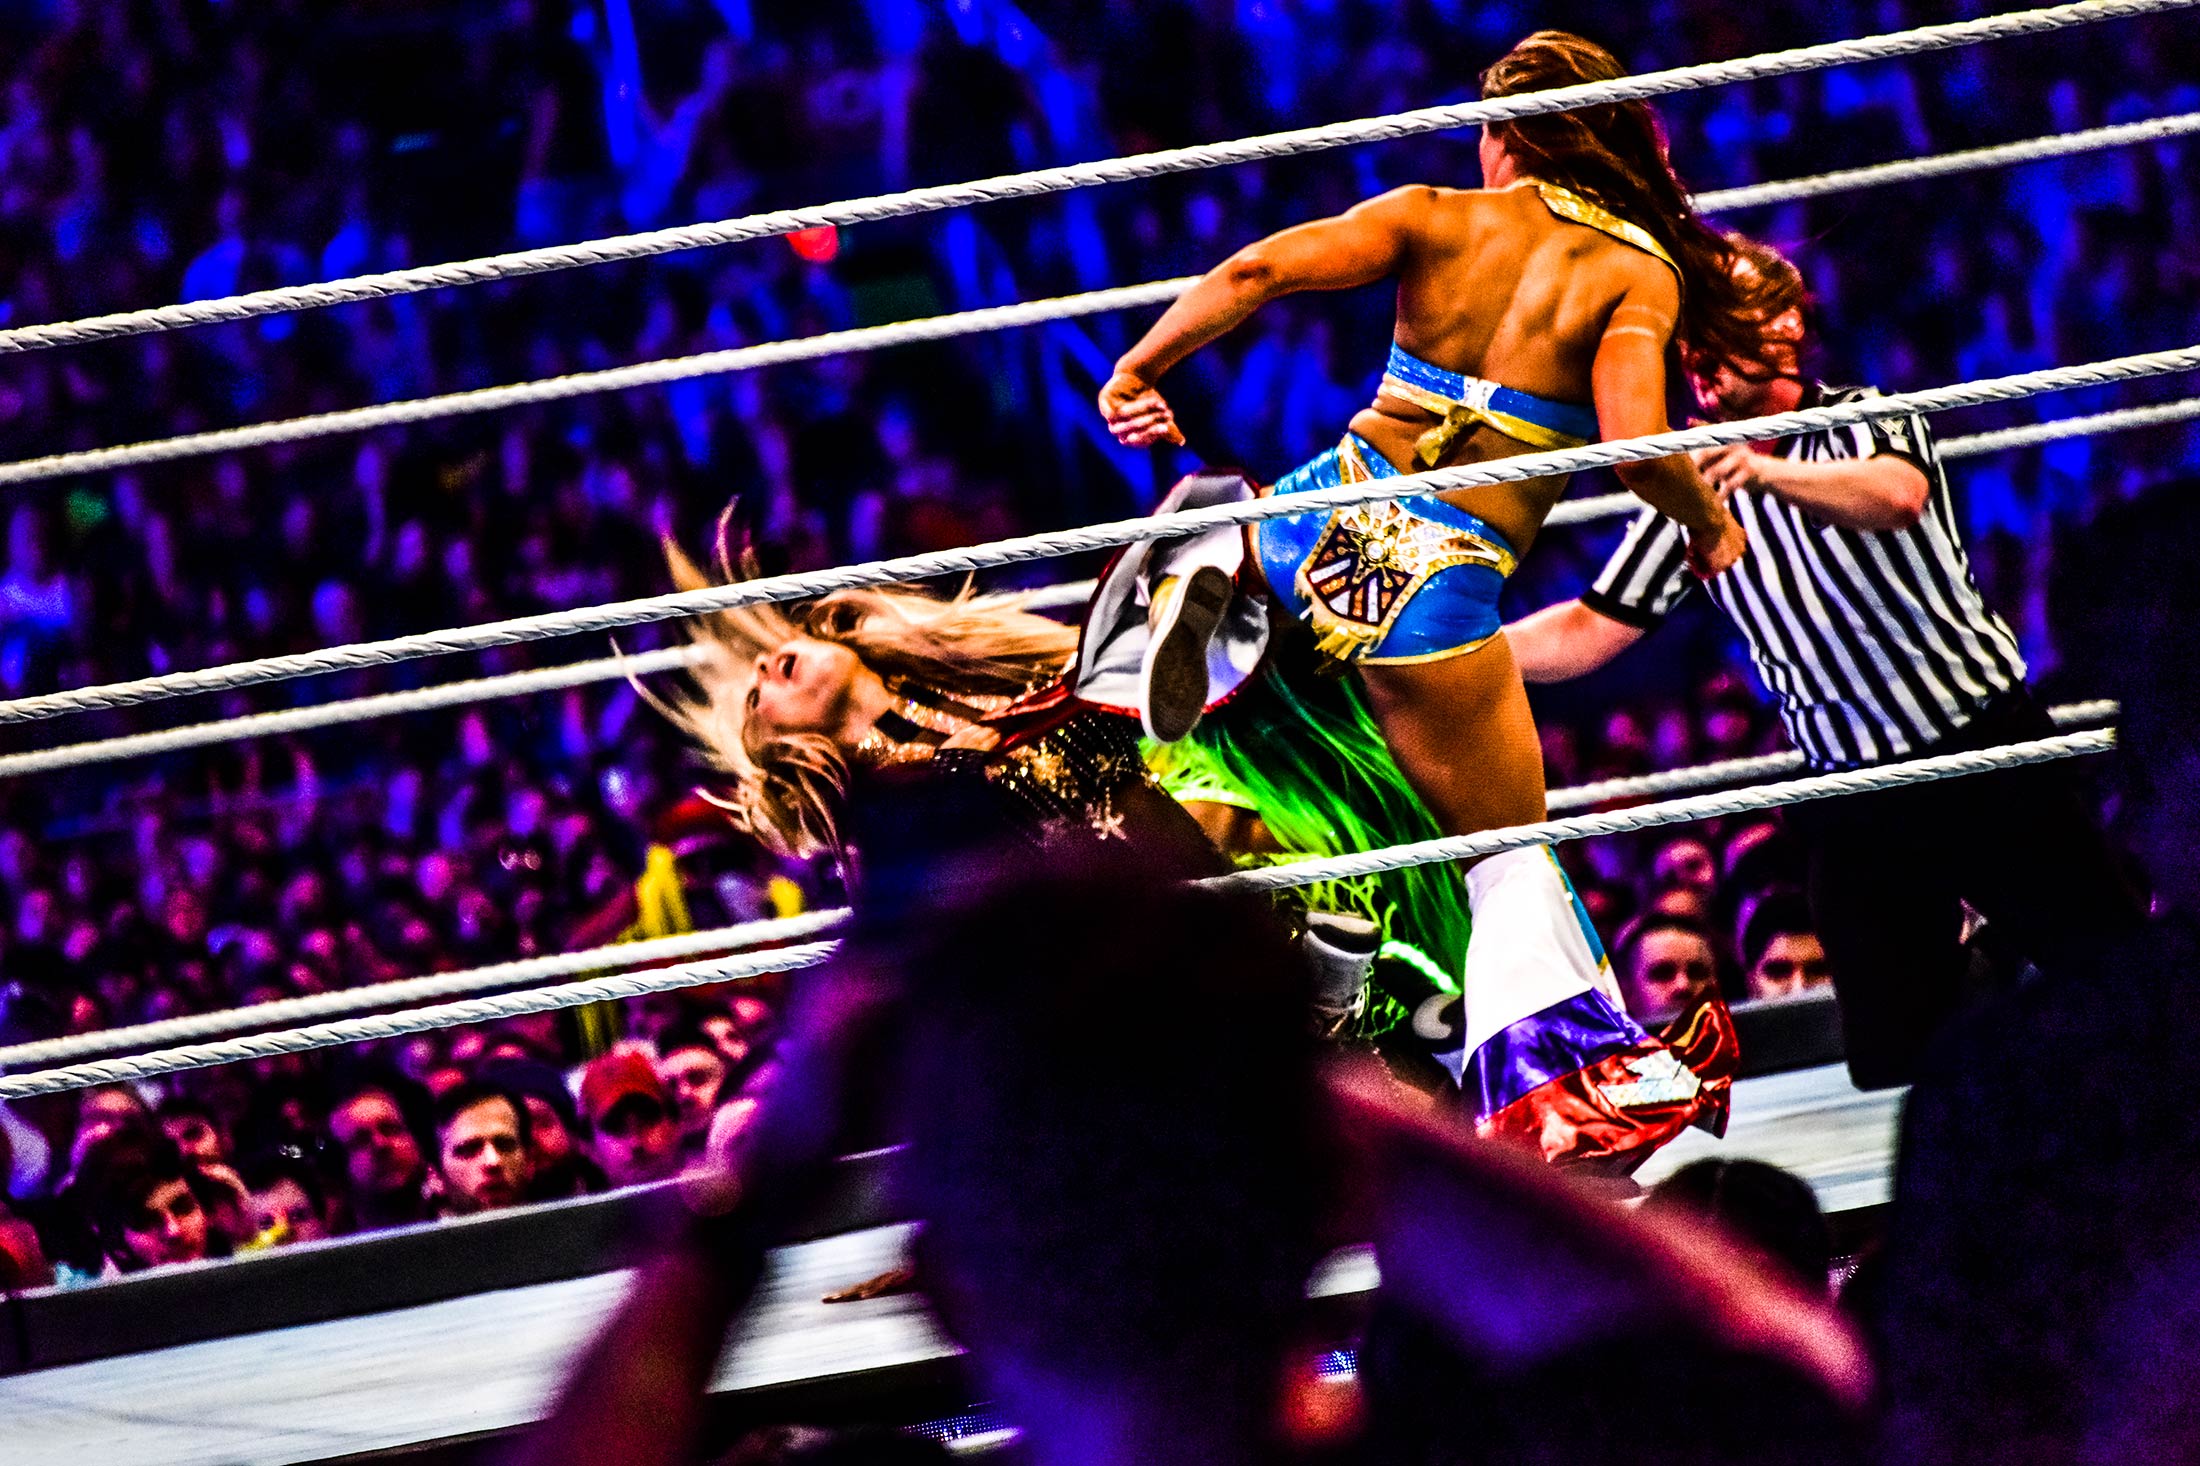 Brutal backstage brawl sets up massive WWE match involving 7 stars